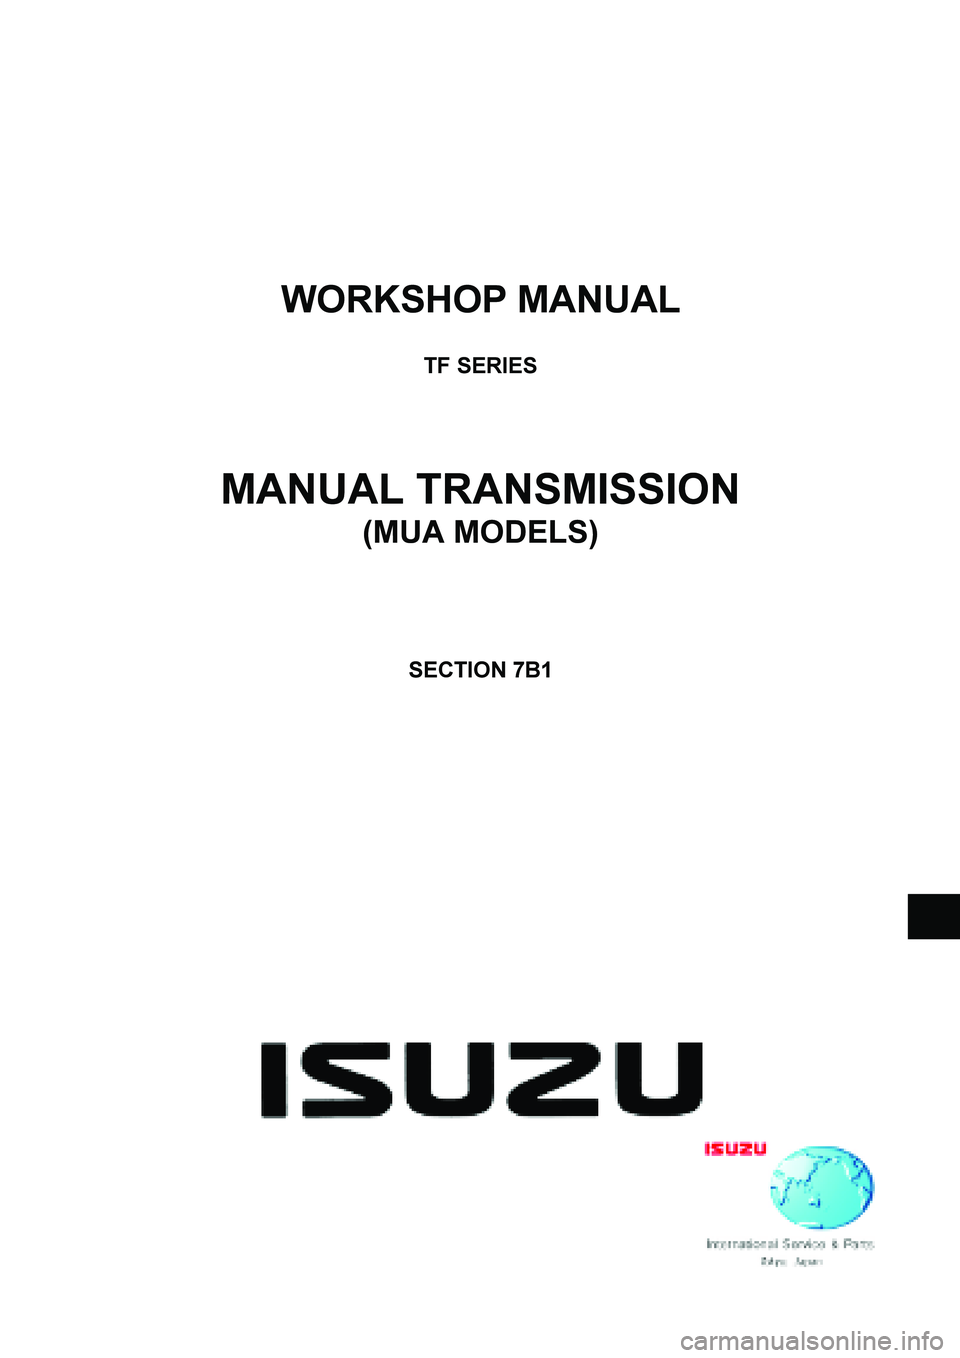 ISUZU TF SERIES 2004  Workshop Manual  
WORKSHOP MANUAL 
 
TF SERIES 
 
 
 
 
MANUAL TRANSMISSION 
(MUA MODELS) 
 
 
 
 
 
SECTION 7B1 
 
 
  